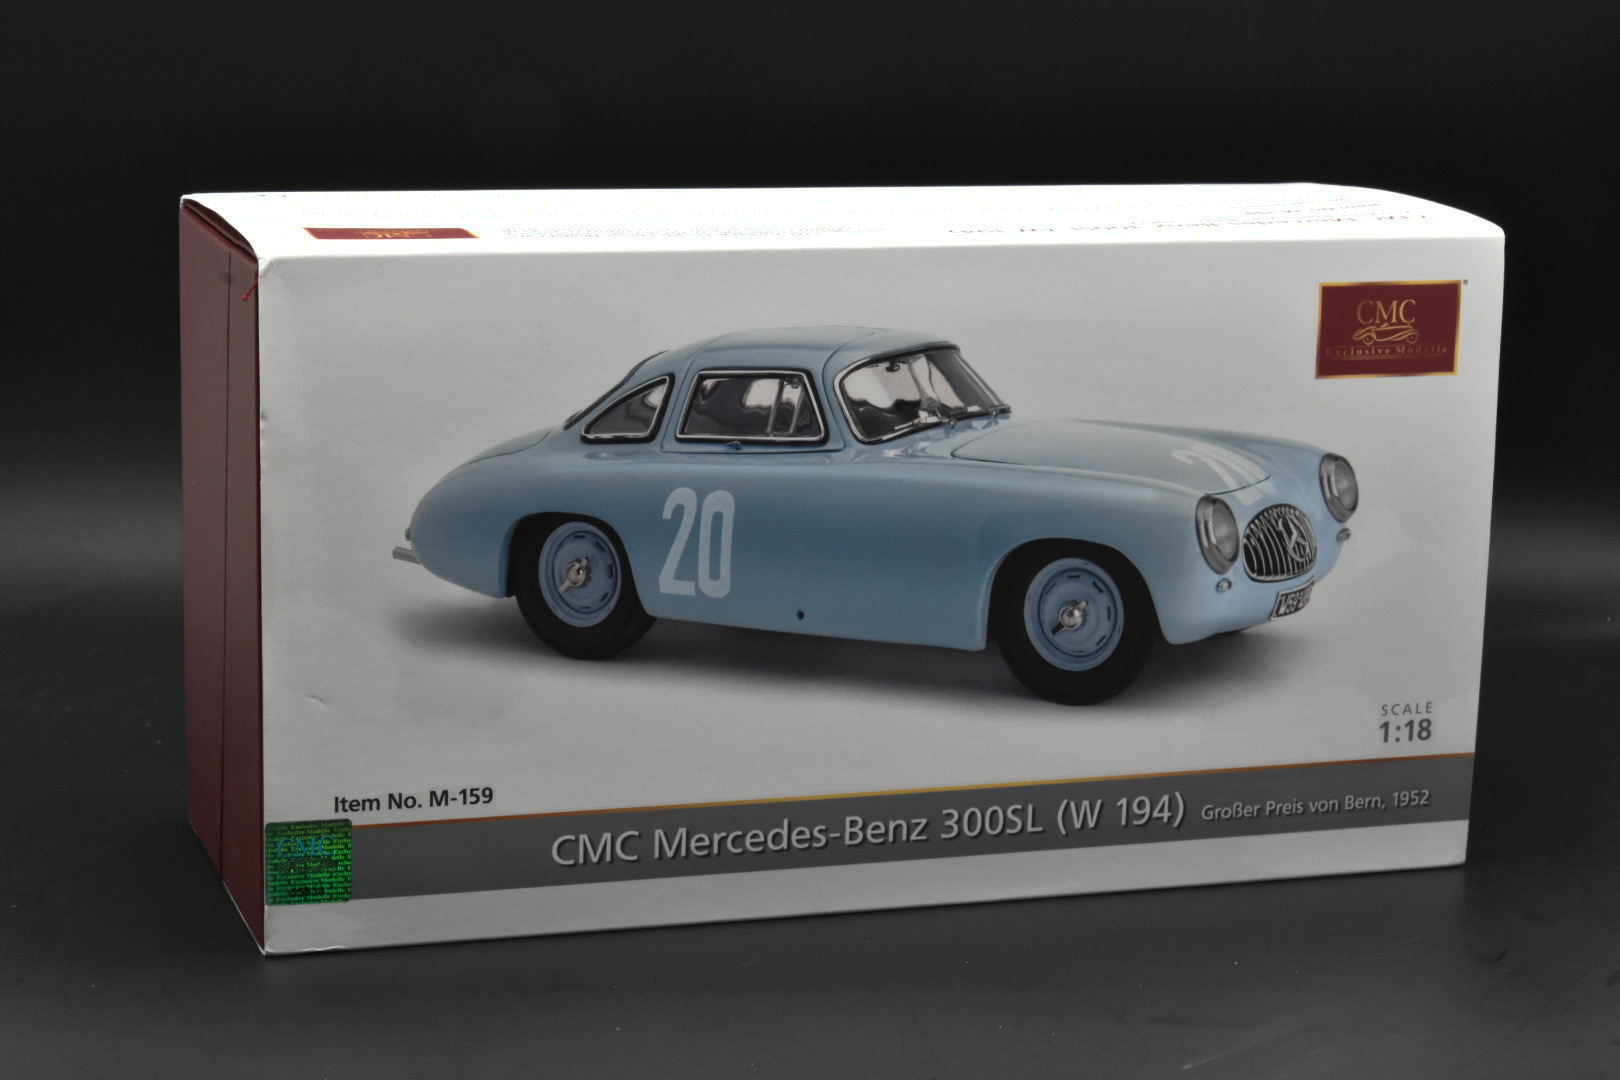 CMC M-159 Mercedes-Benz 300 SLGreat Price of Bern, 1952 20 | TR